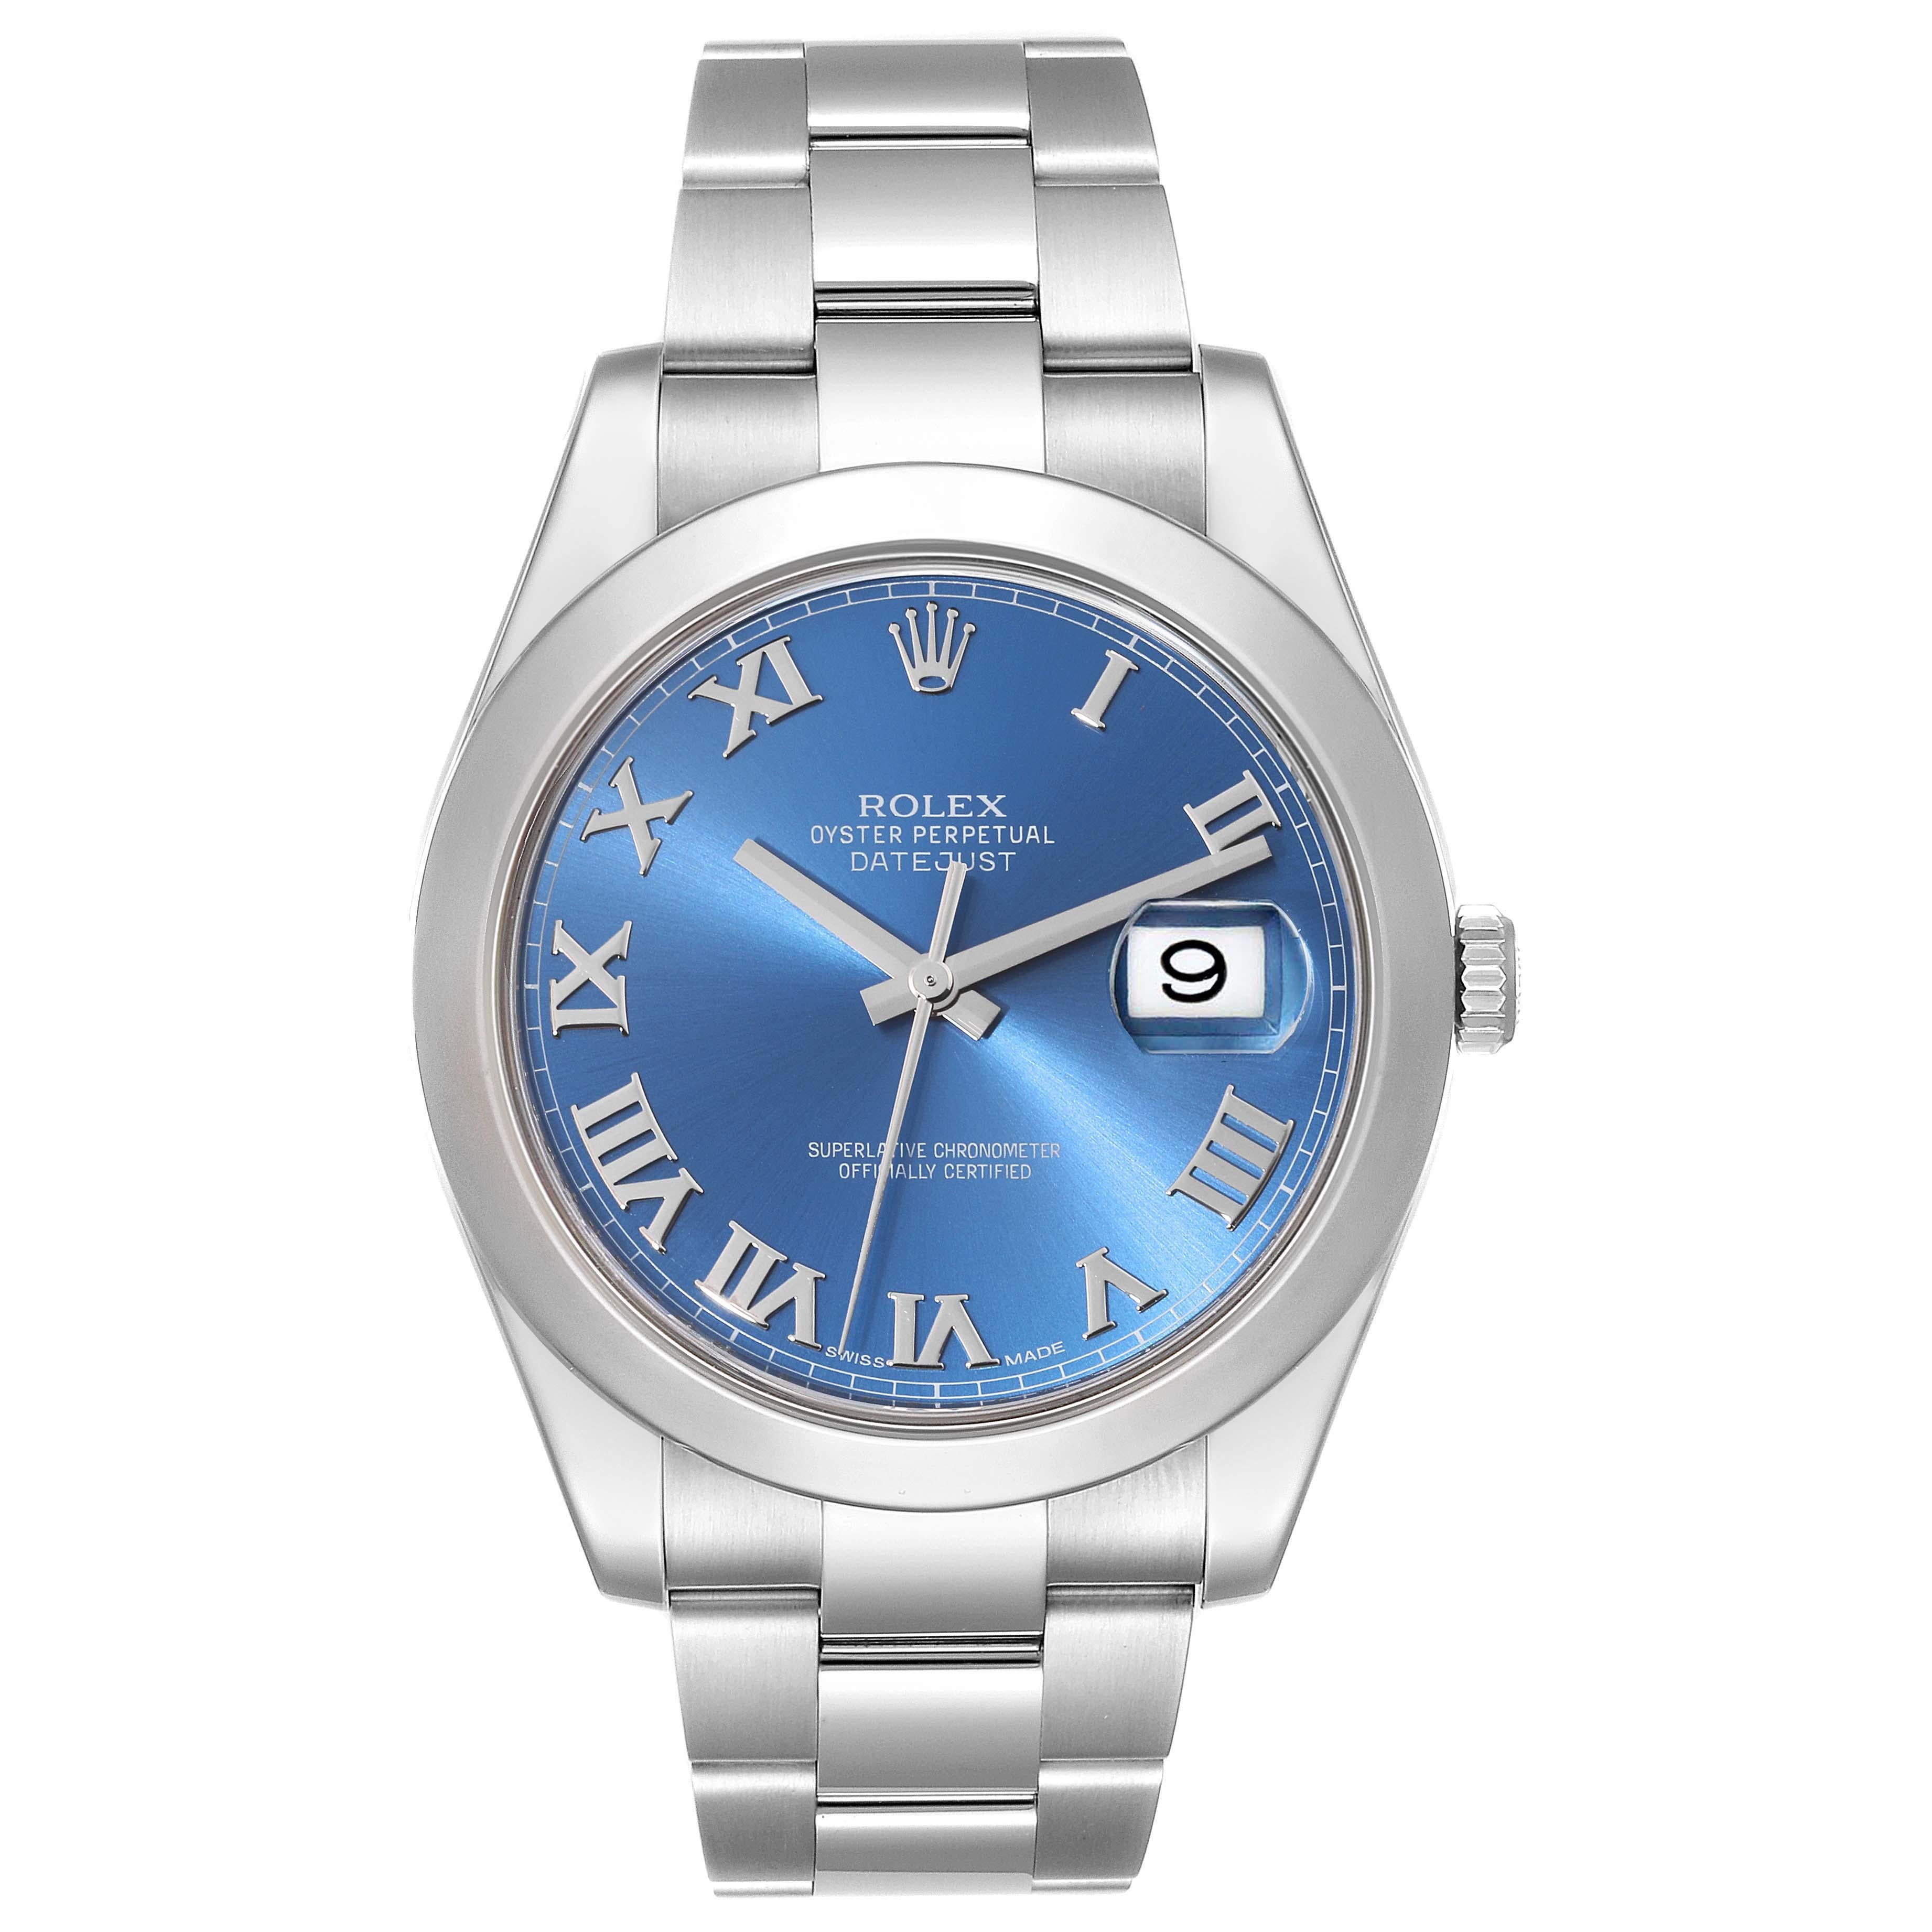 Rolex Datejust II Smooth Bezel Blue Roman Dial Steel Mens Watch 116300 1